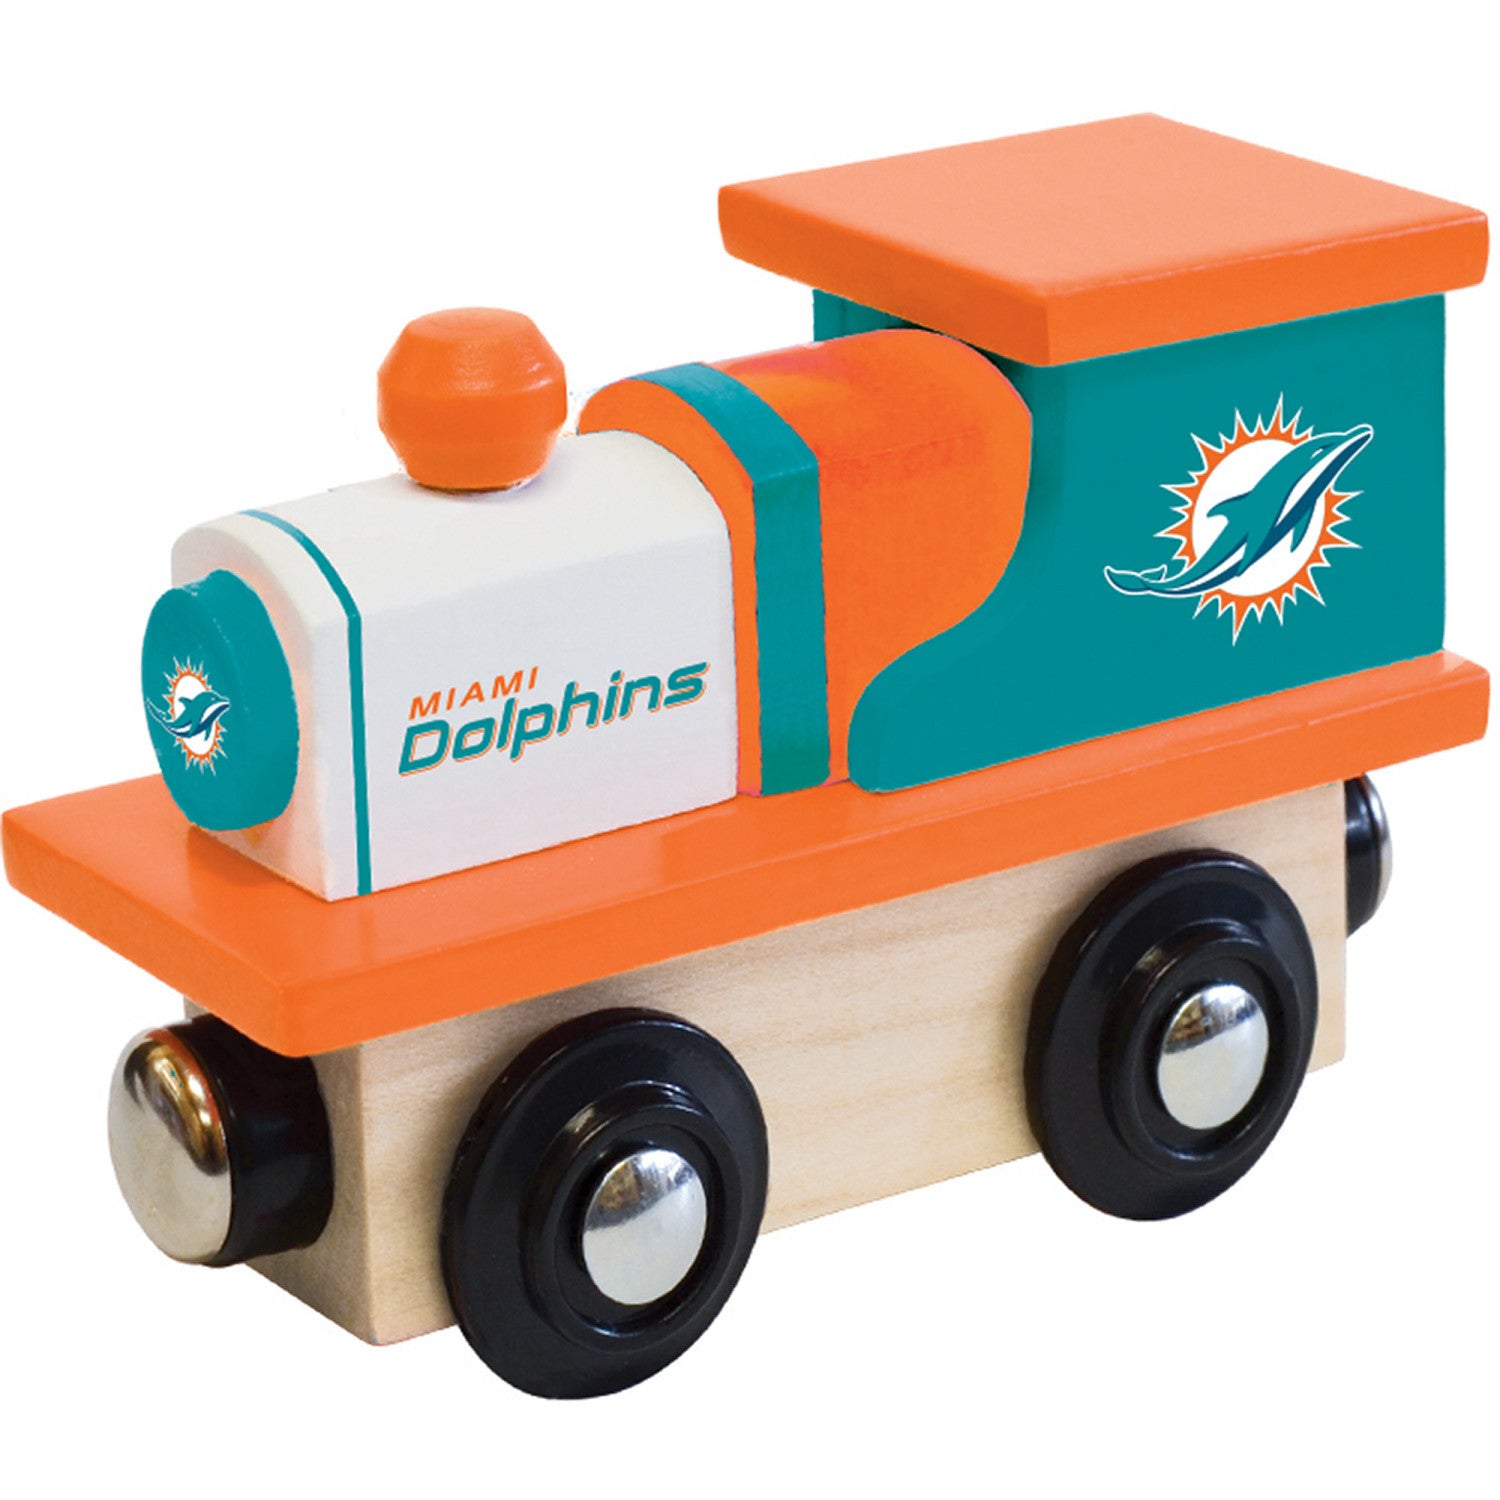 Miami Dolphins Toy Train Engine